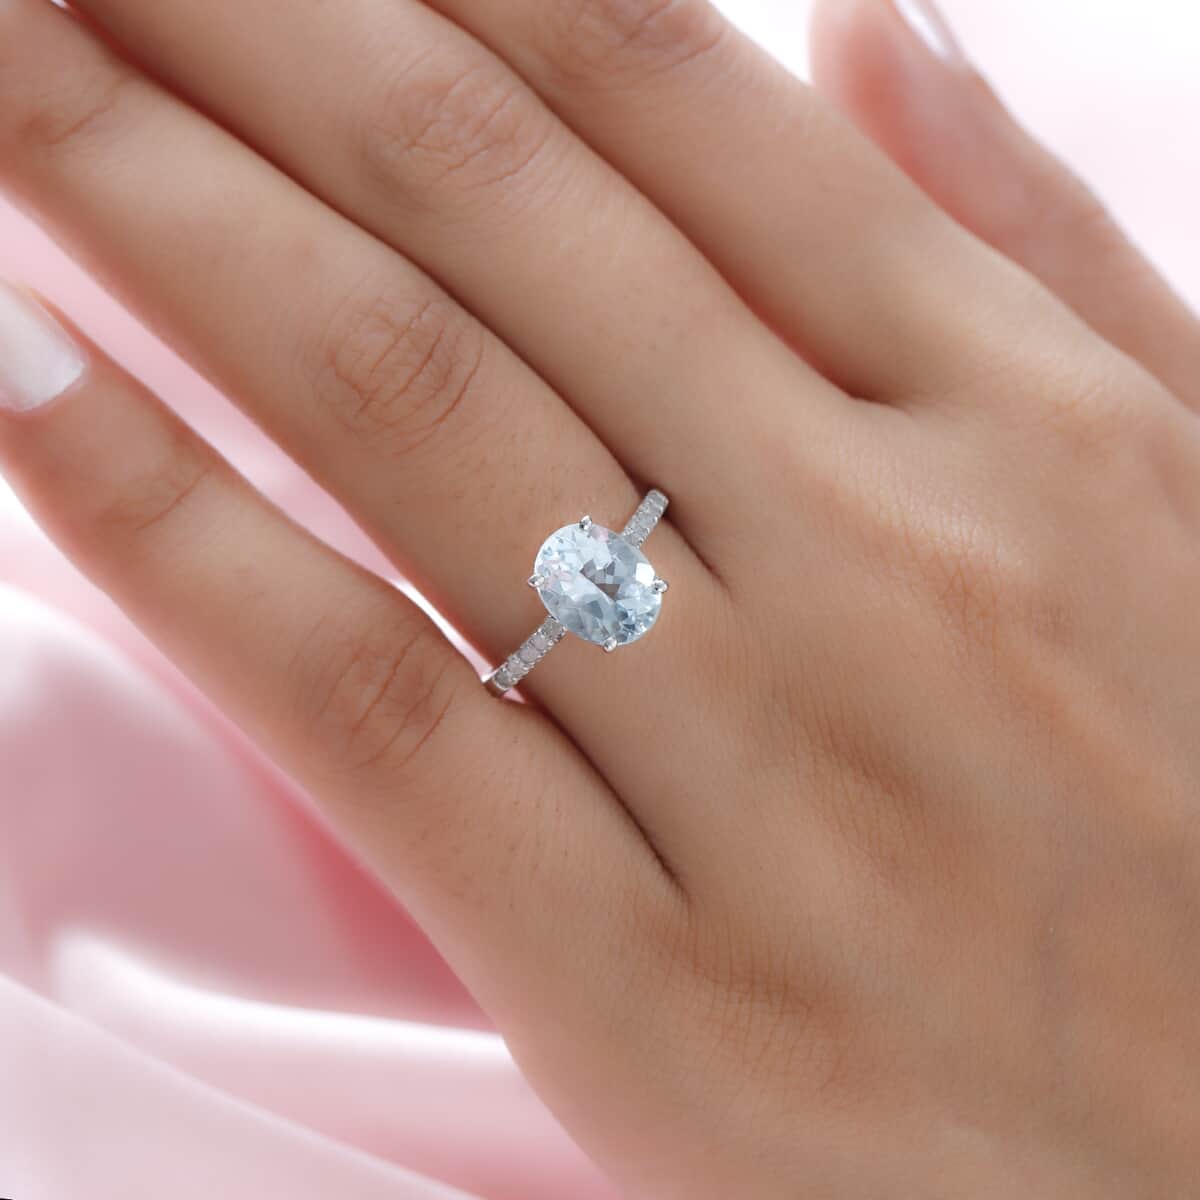 Premium Mangoro Aquamarine, Diamond (0.15 cts) Ring in Platinum Over Sterling Silver (Size 10.0) 2.40 ctw image number 2